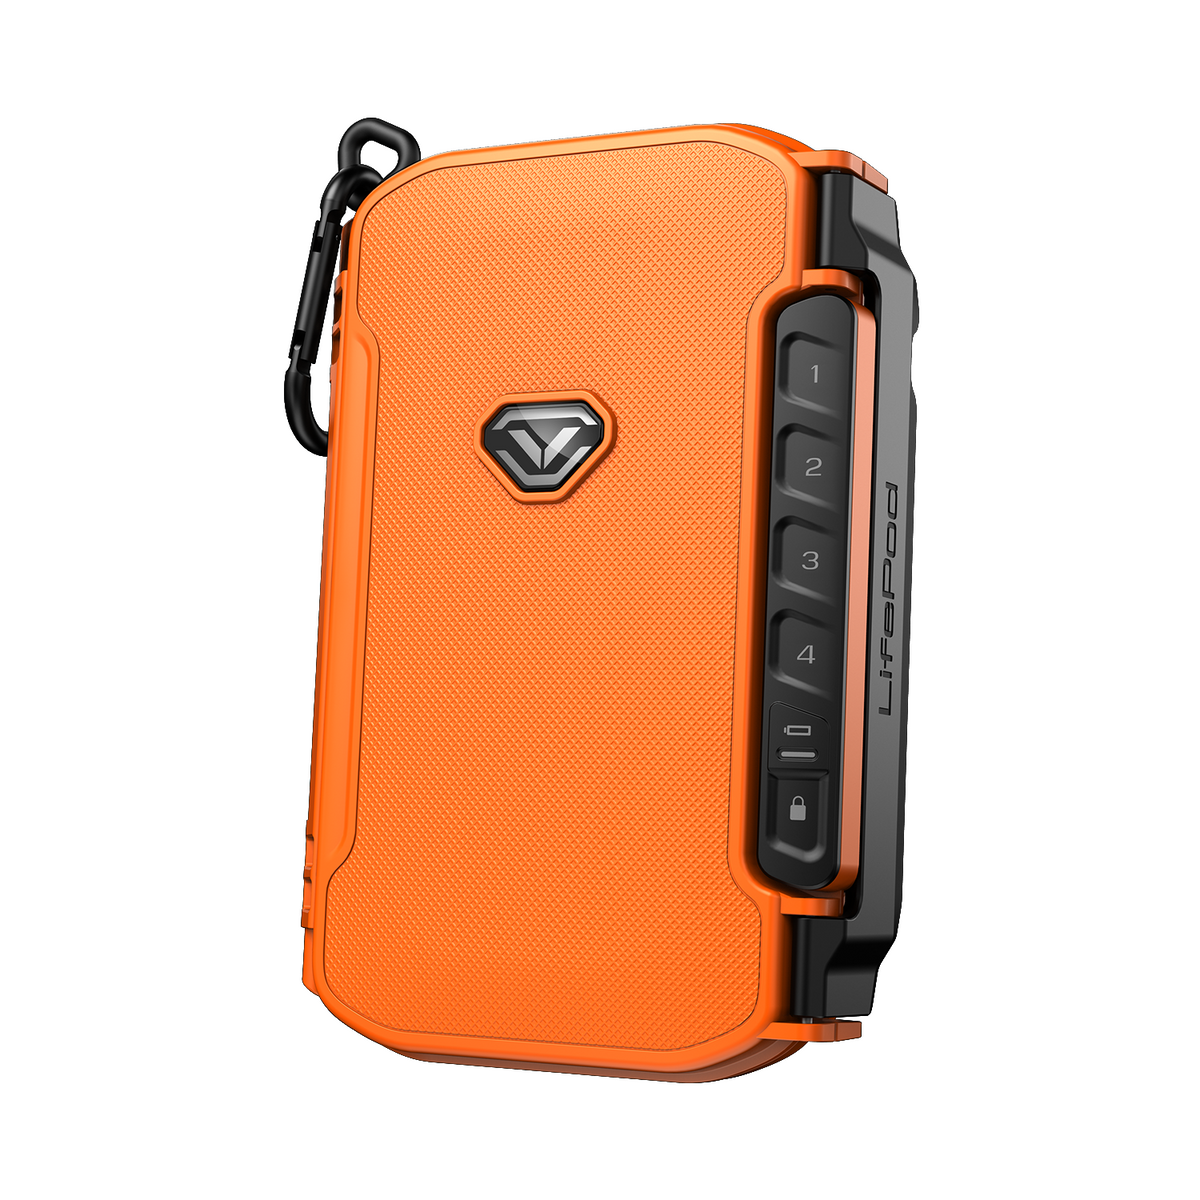 Vaultek - LifePod X Mini Weatherproof Lockbox